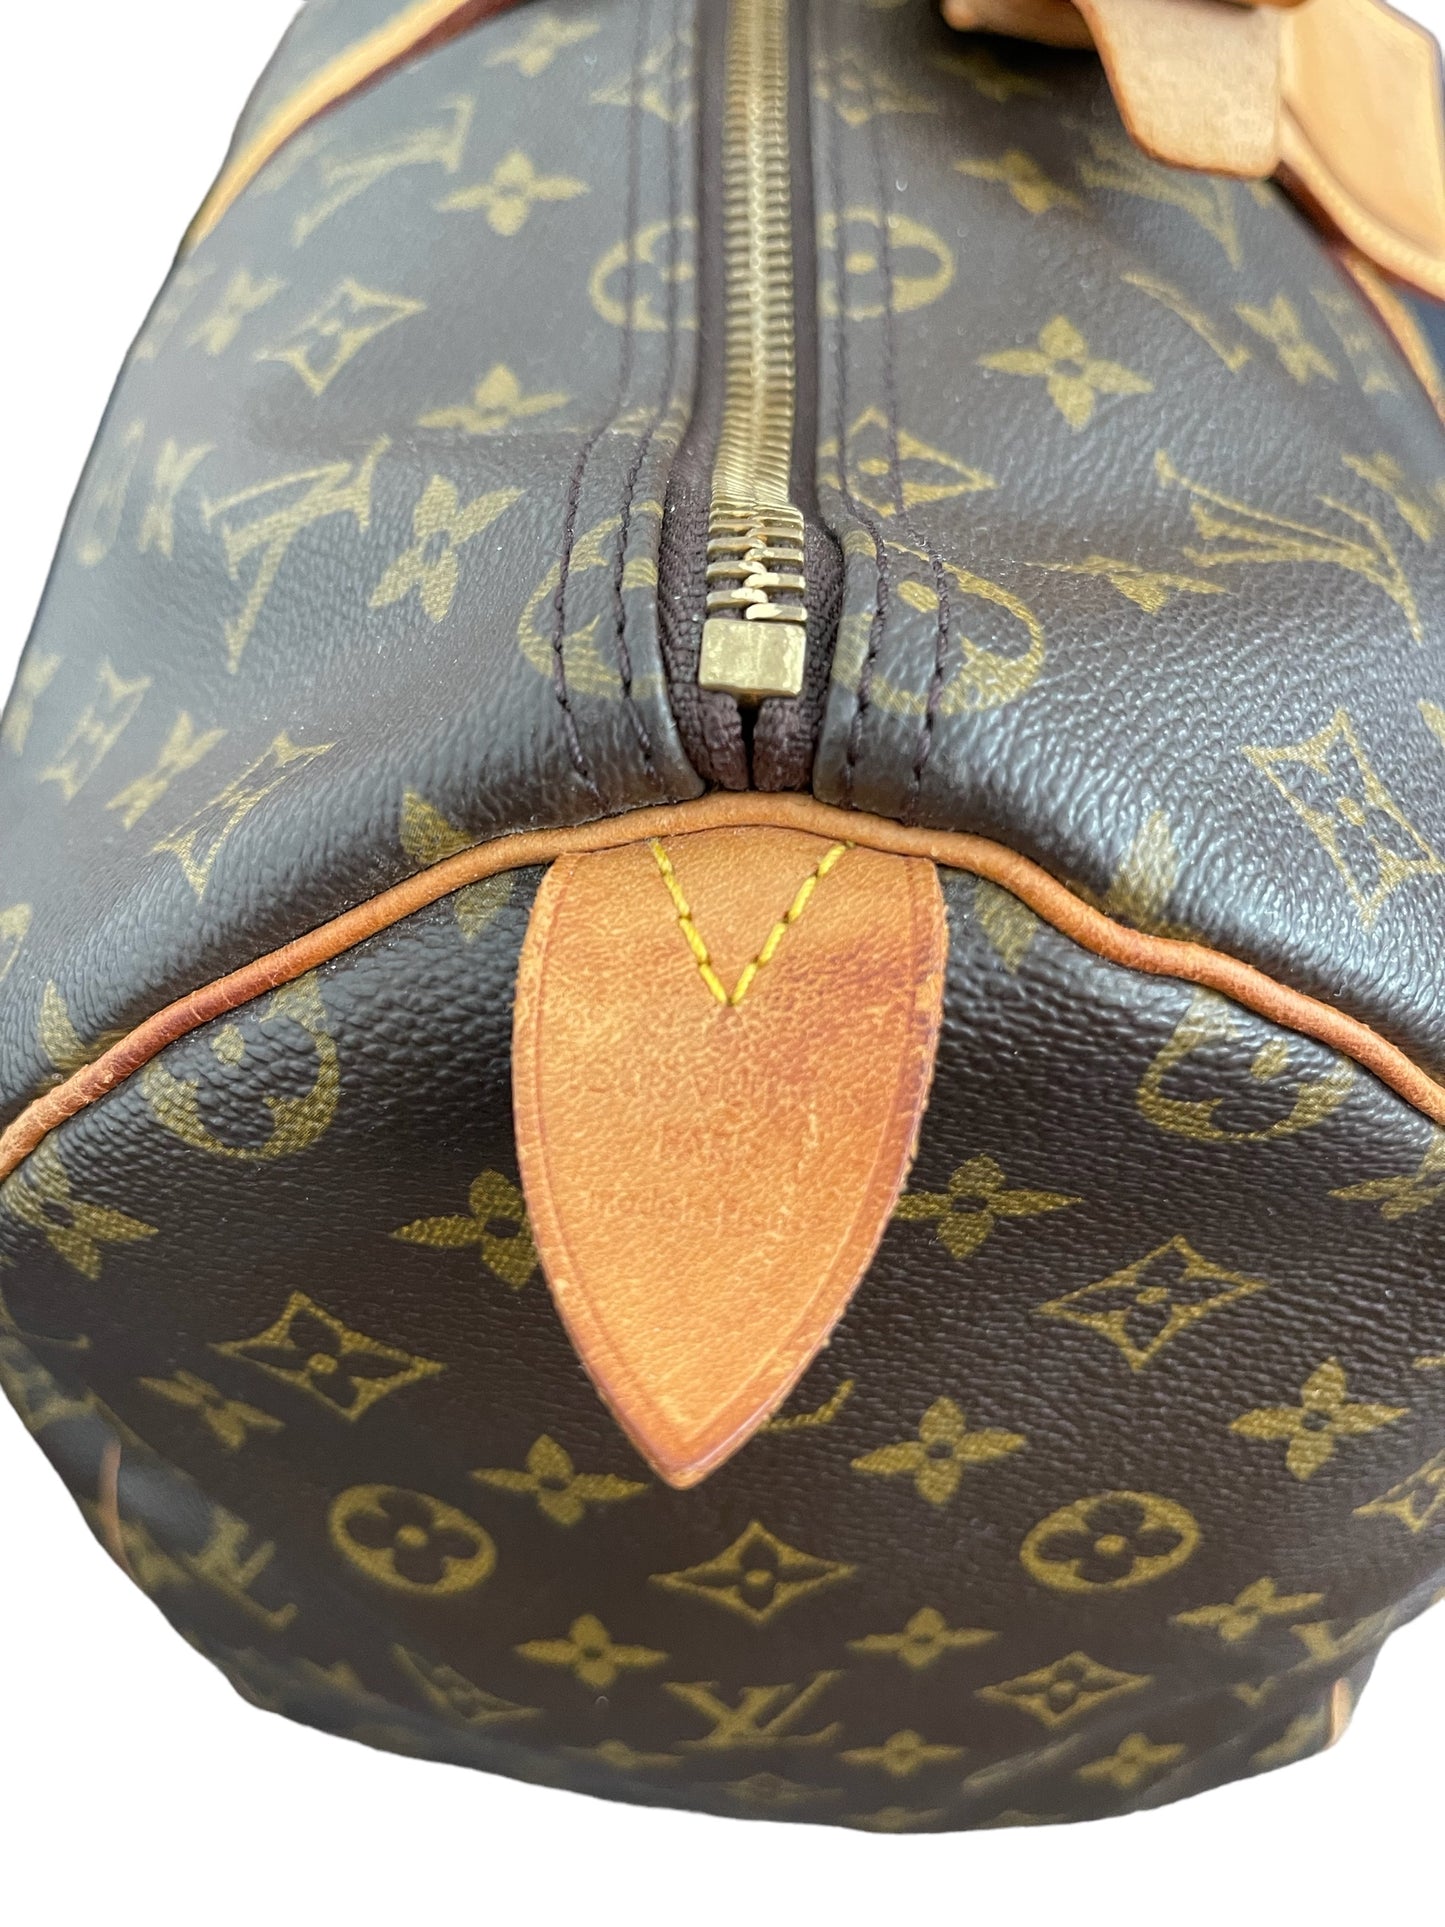 Louis Vuitton Keepall 50 Monogram Travel Bag